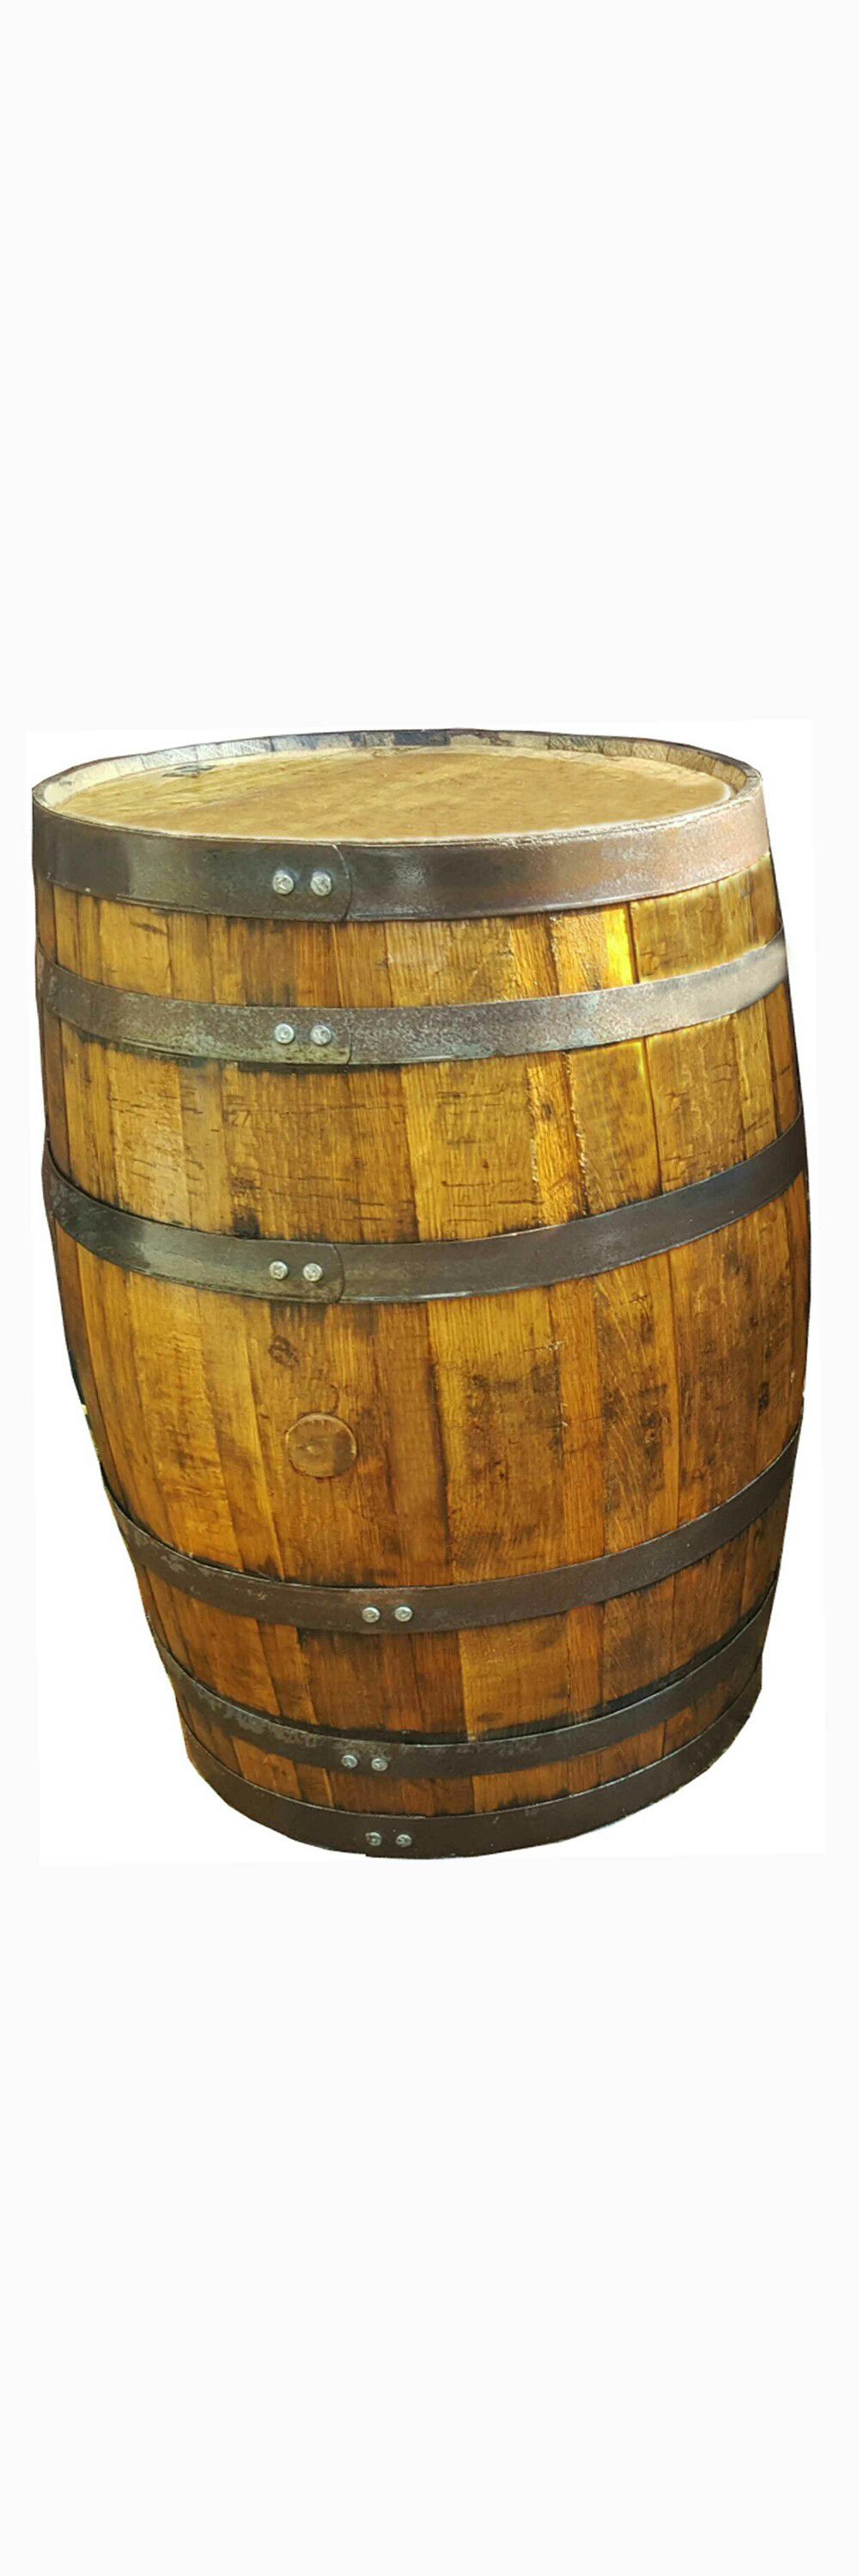 Distilled whiskey wine barrel for decor restaurant sports bar smoke shop tiki bar